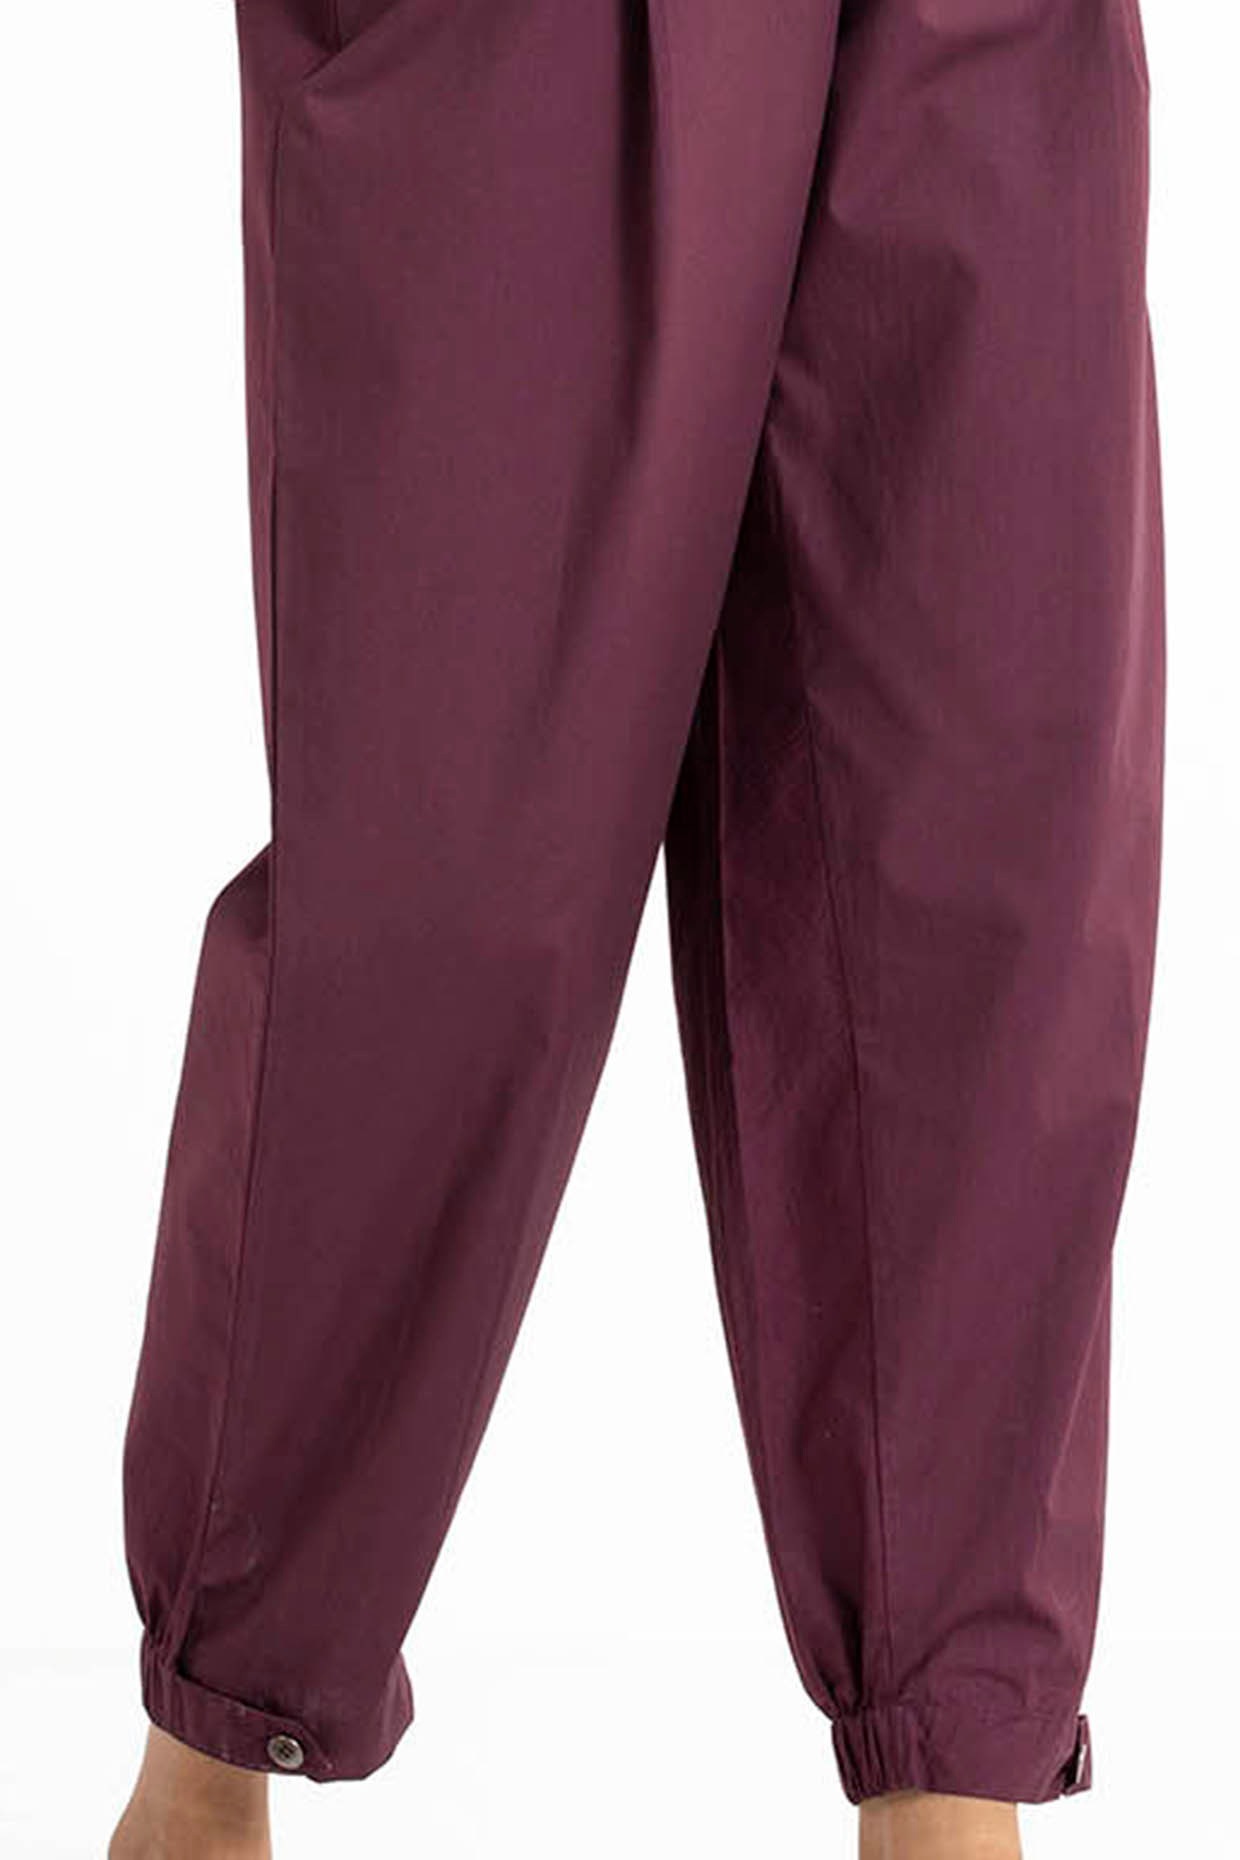 Designer Brown Cotton Narrow Bottom Trouser Online | Bagtesh Fashion